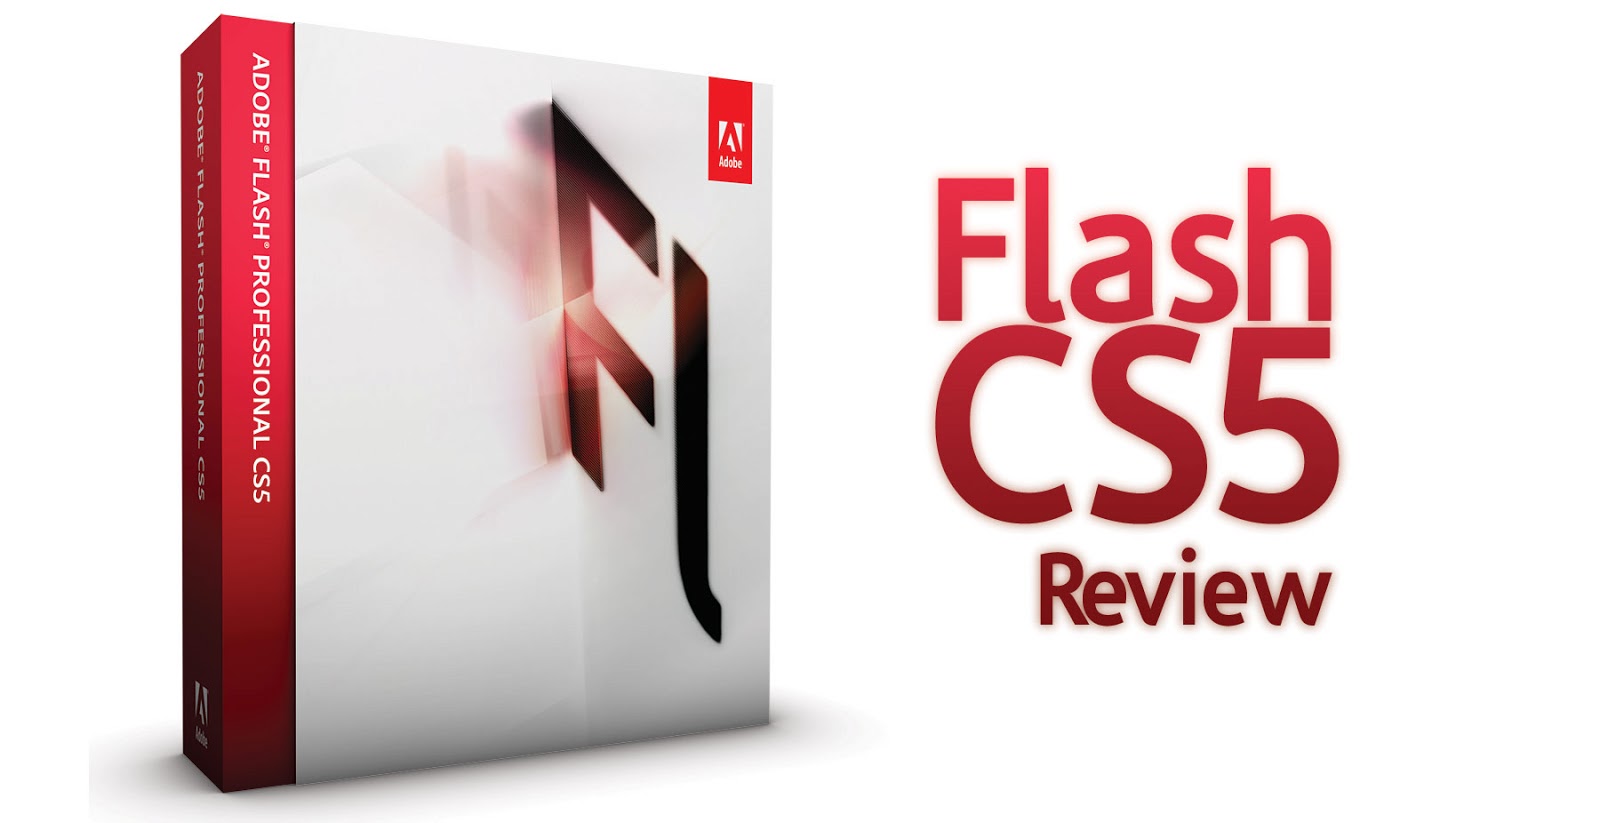 adobe flash player cs4 crack download